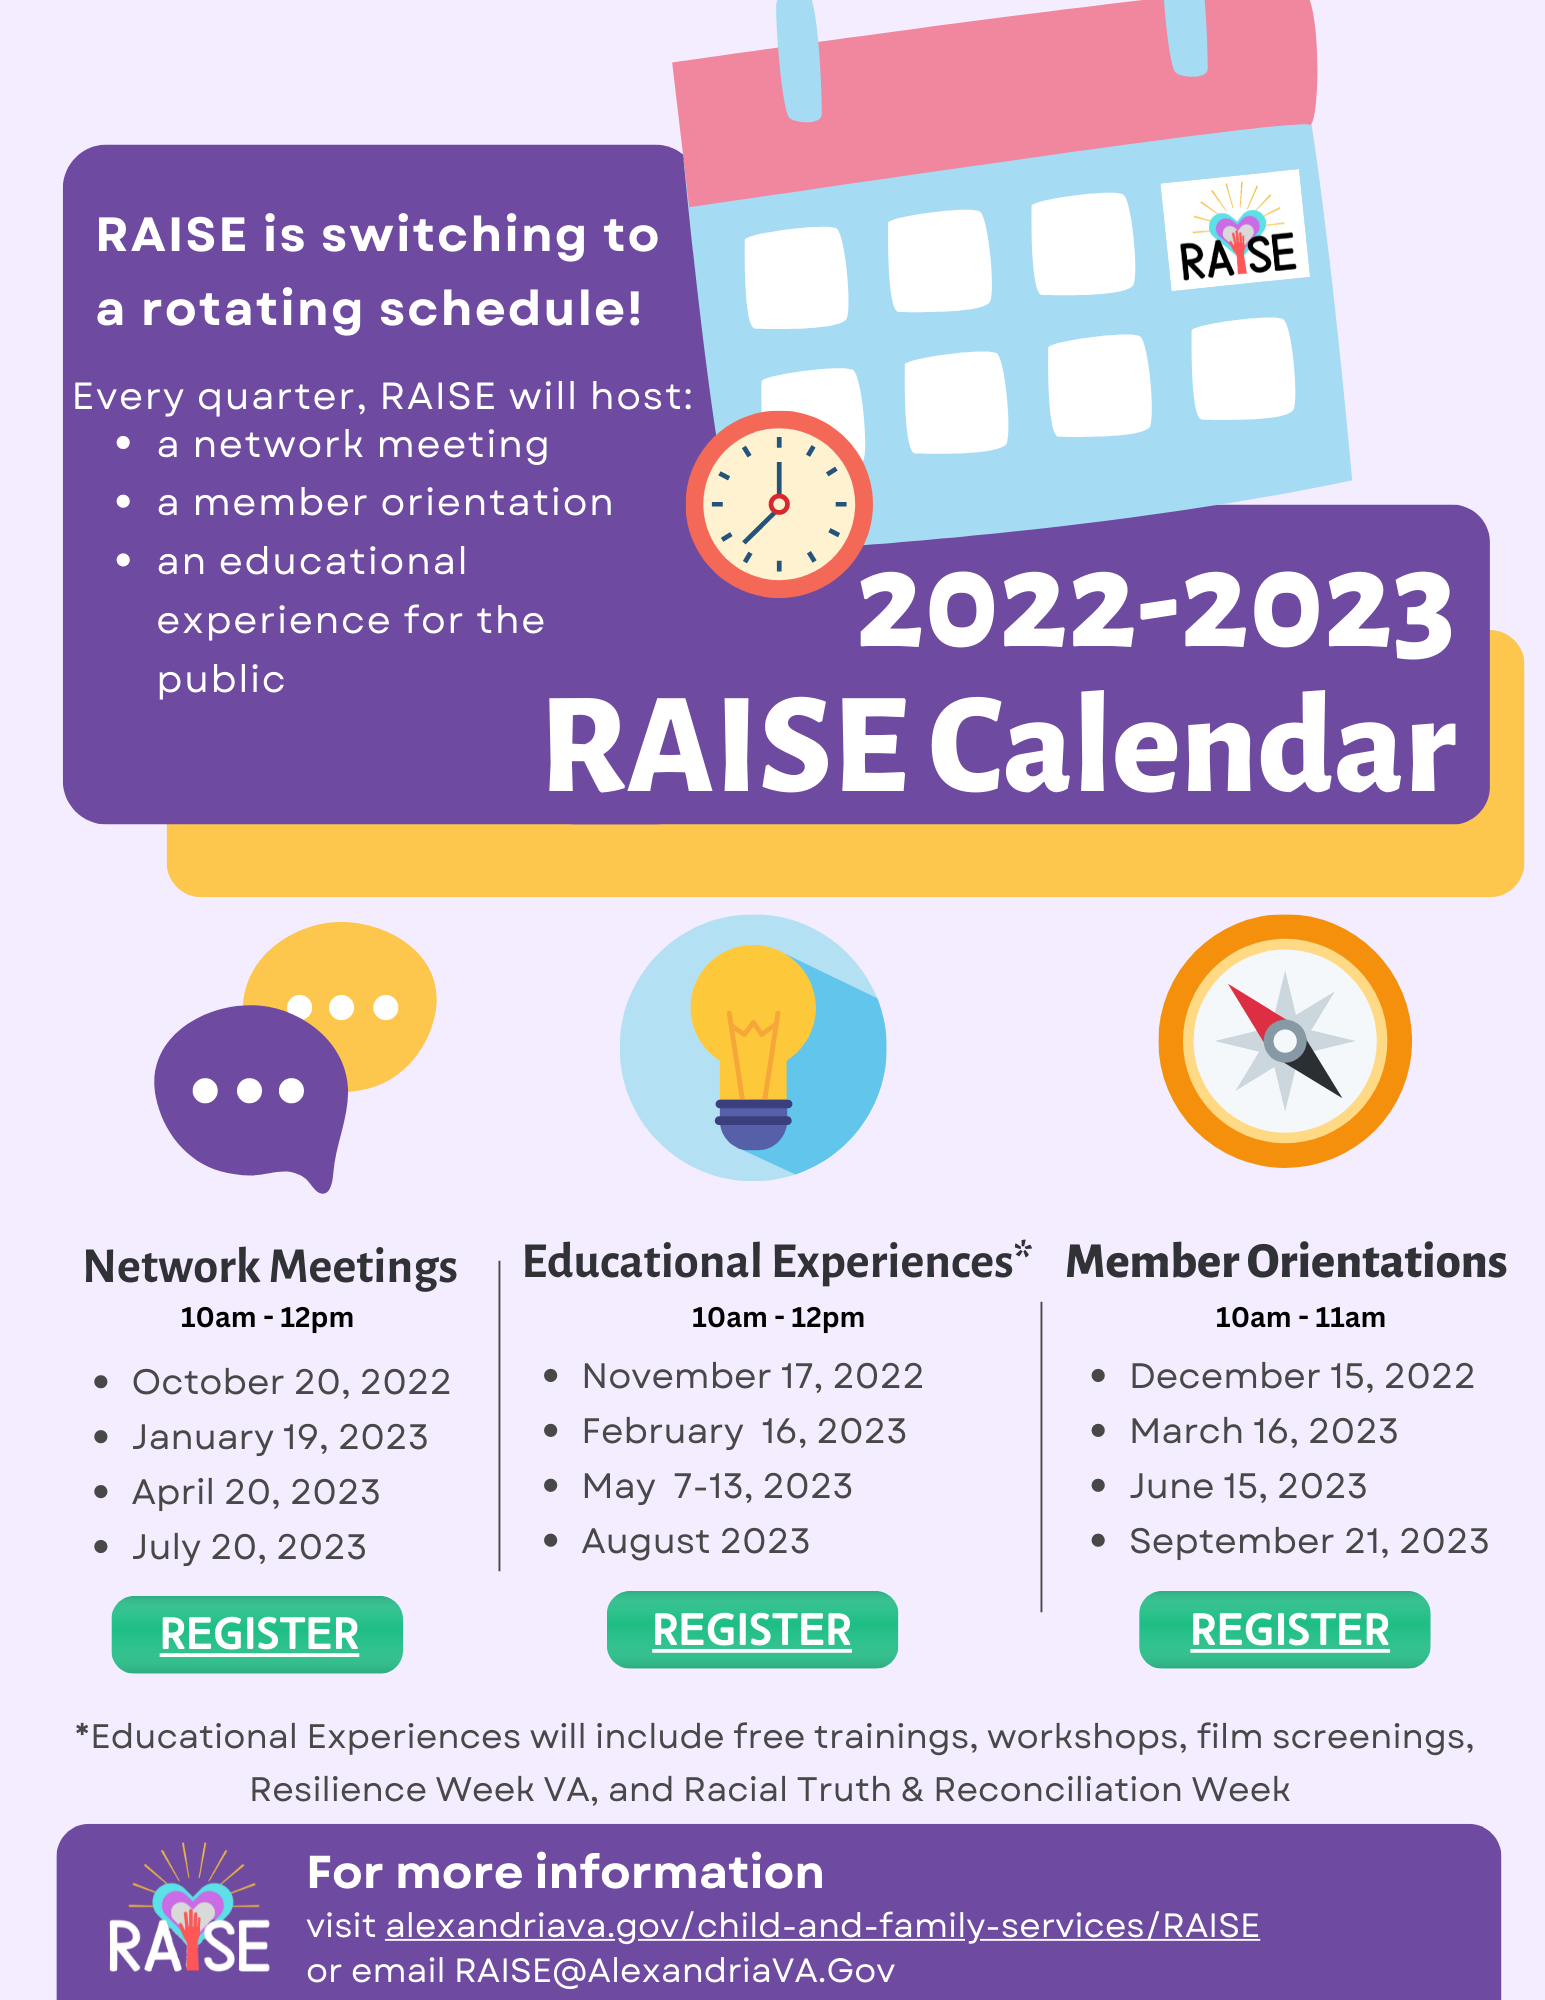 RAISE Calendar for 2022-2023